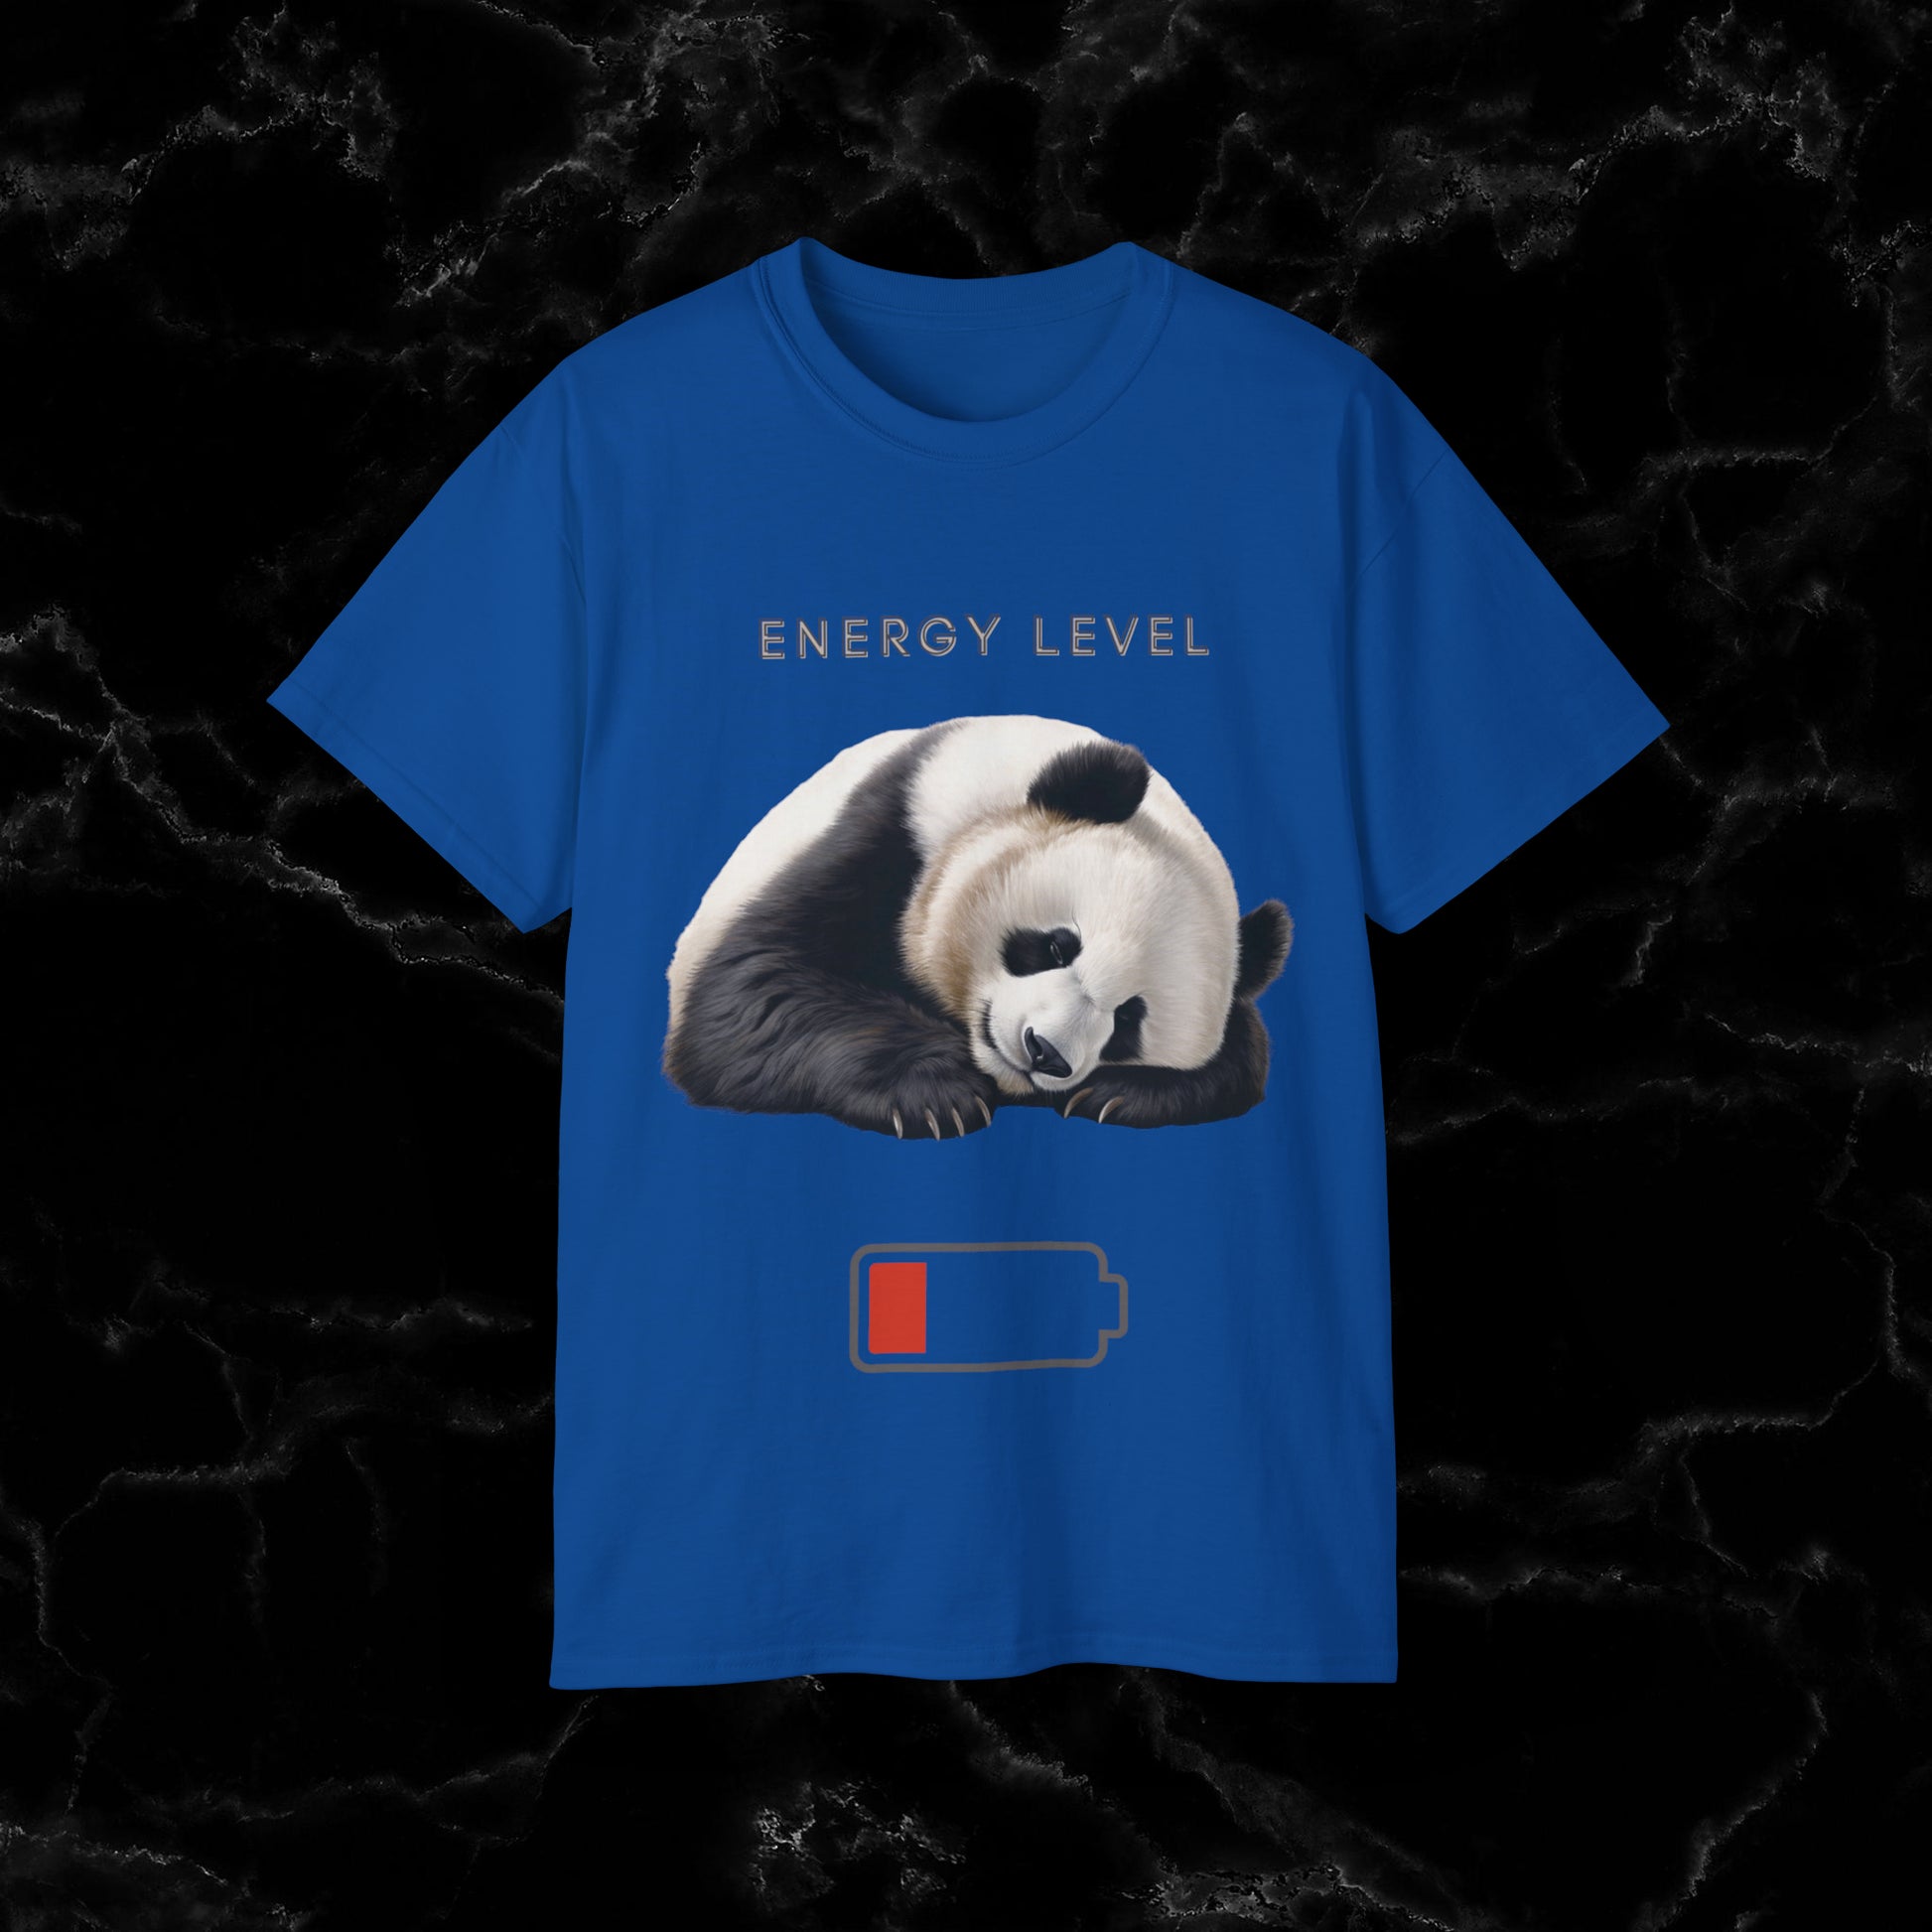 Nap Time Panda Unisex Funny Tee - Hilarious Panda Nap Design - Energy Level T-Shirt Royal L 